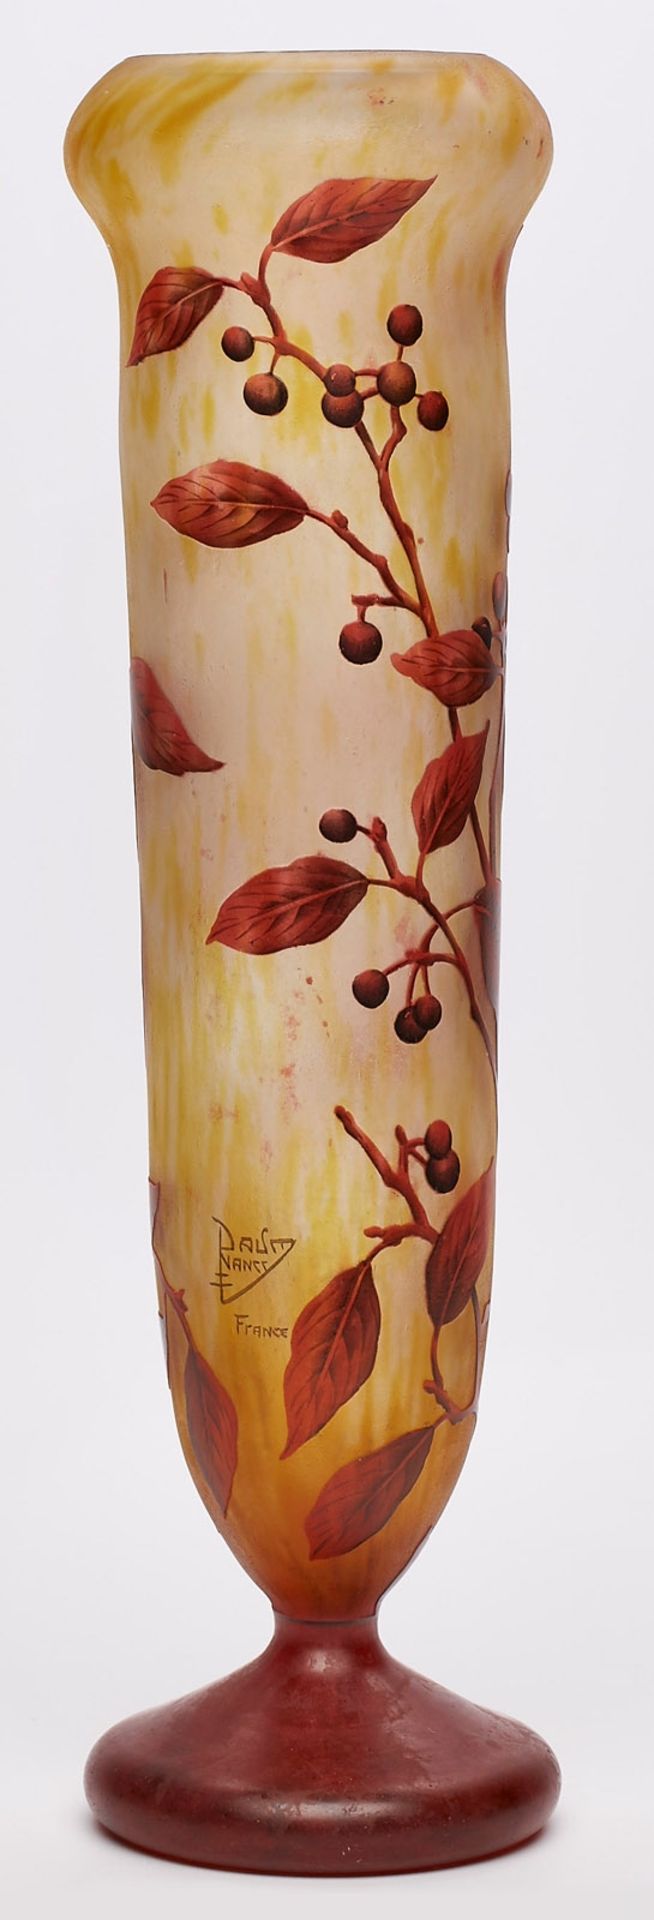 Gr. Vase "Lorbeer", Daum Nancy um 1920. - Bild 2 aus 2